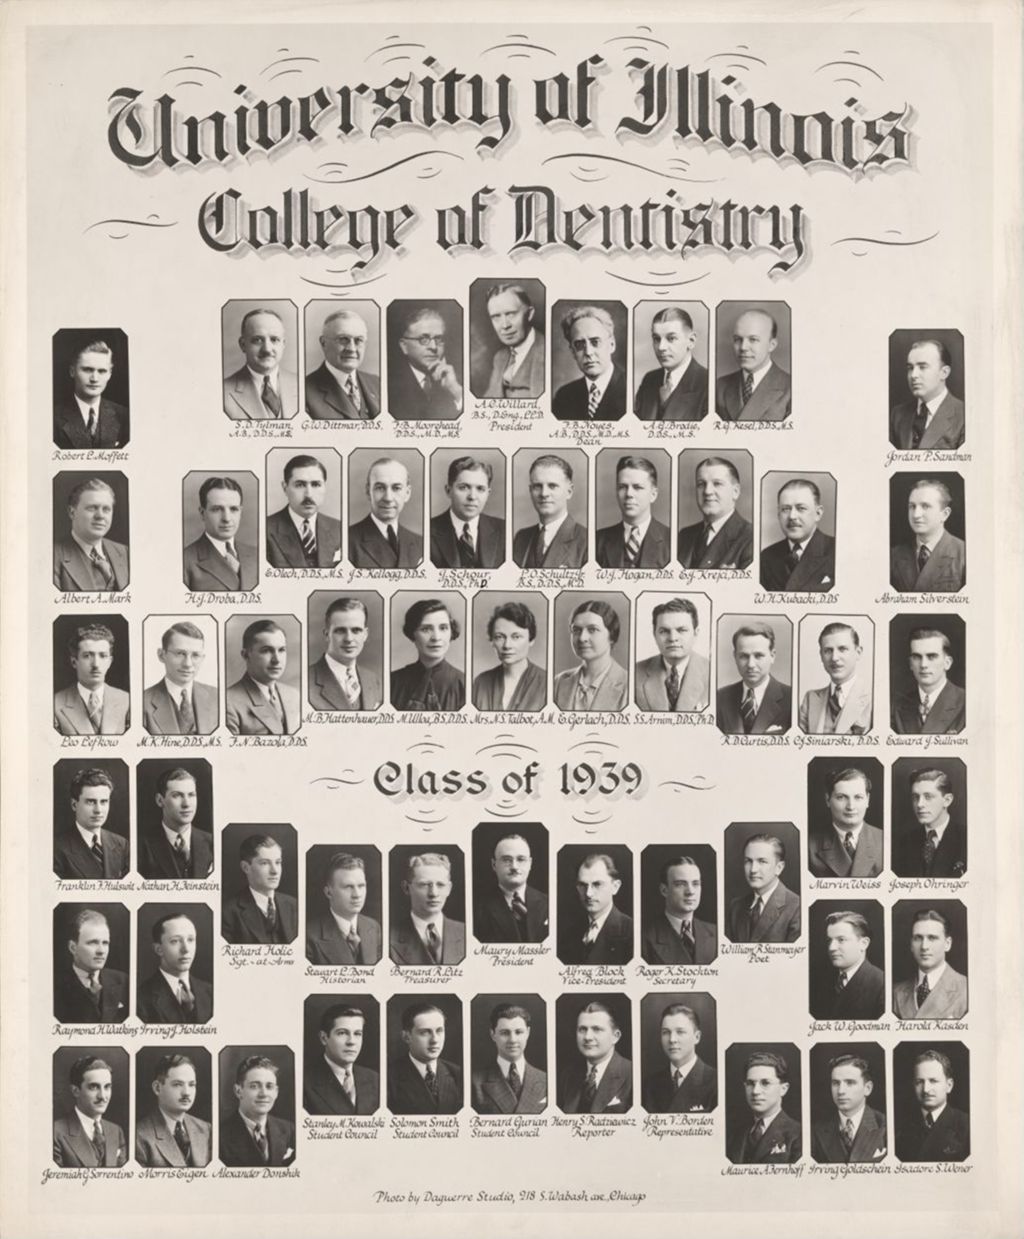 Miniature of 1939 graduating class, University of Illinois College of Dentistry